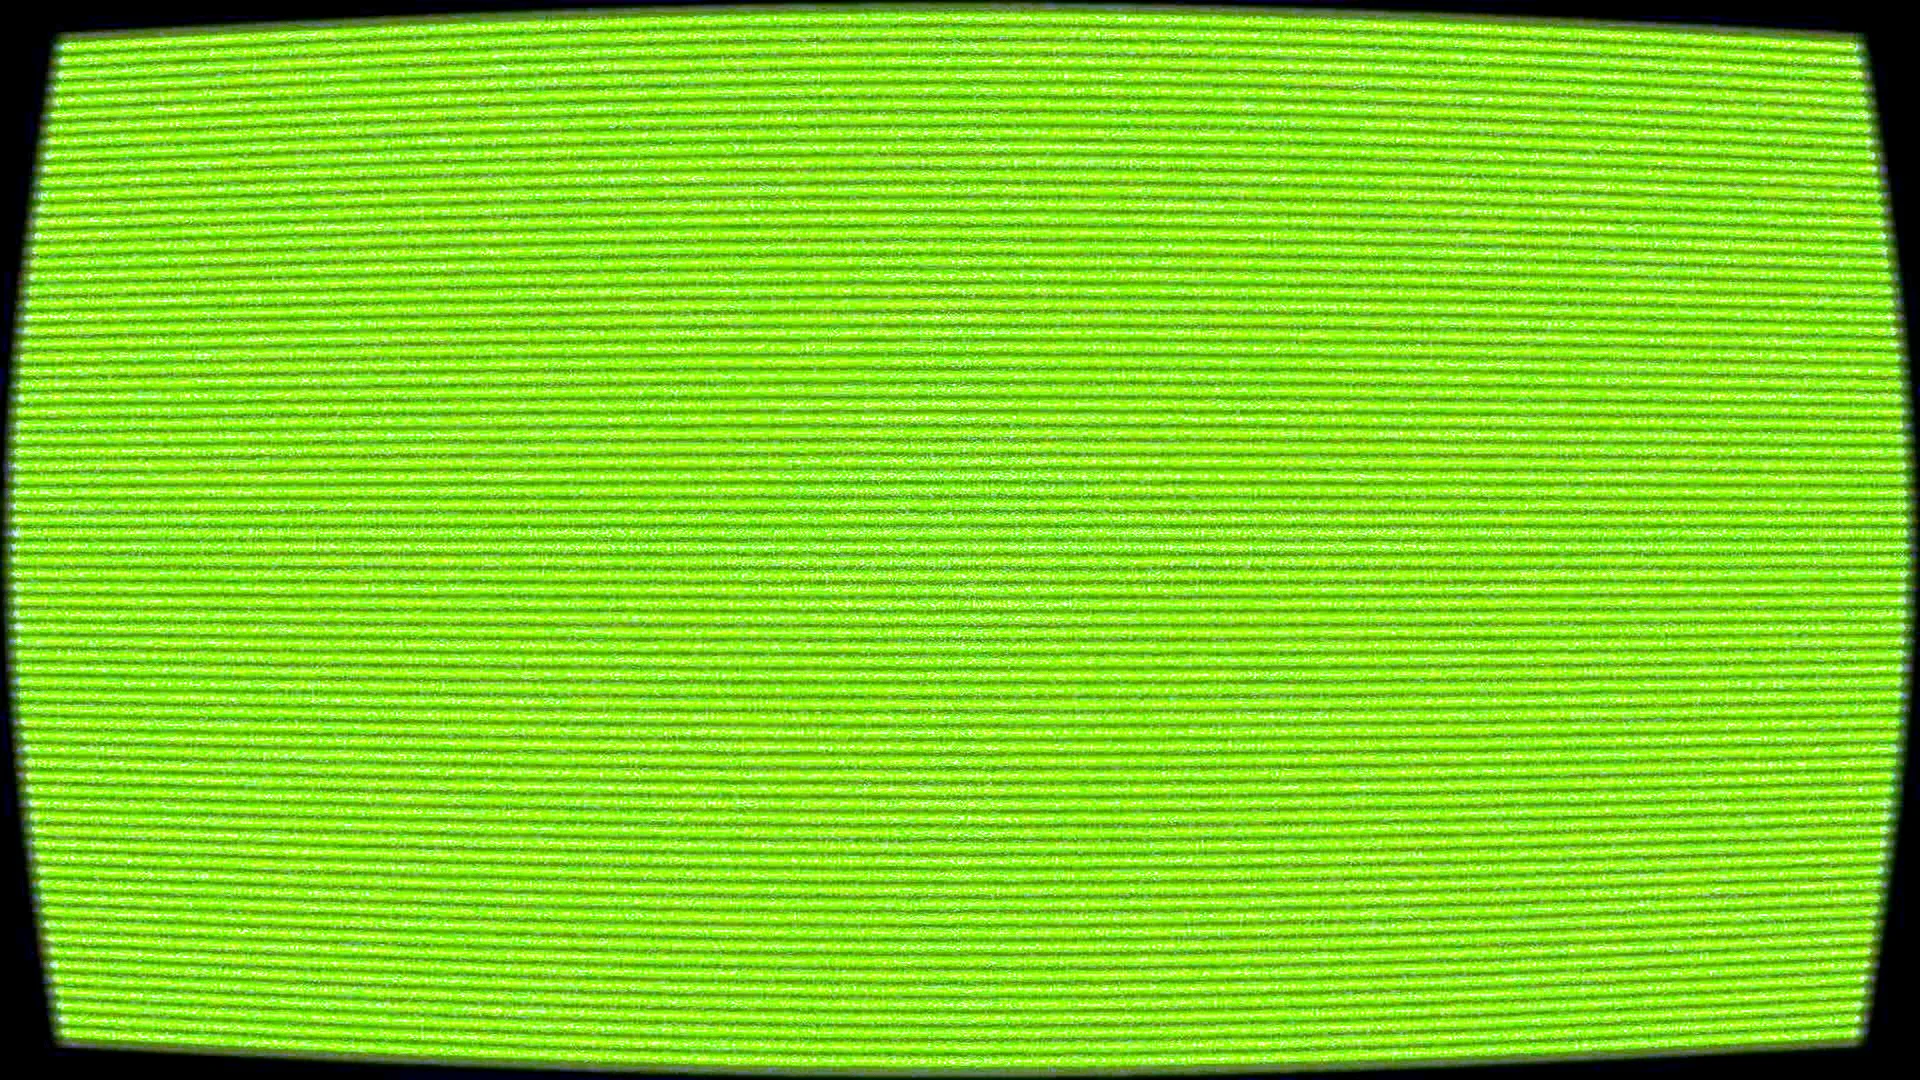 Tv effect. Грин скрин хромакей. Эффект телевизора. Эффект экрана телевизора. Зеленая полоска на экране.